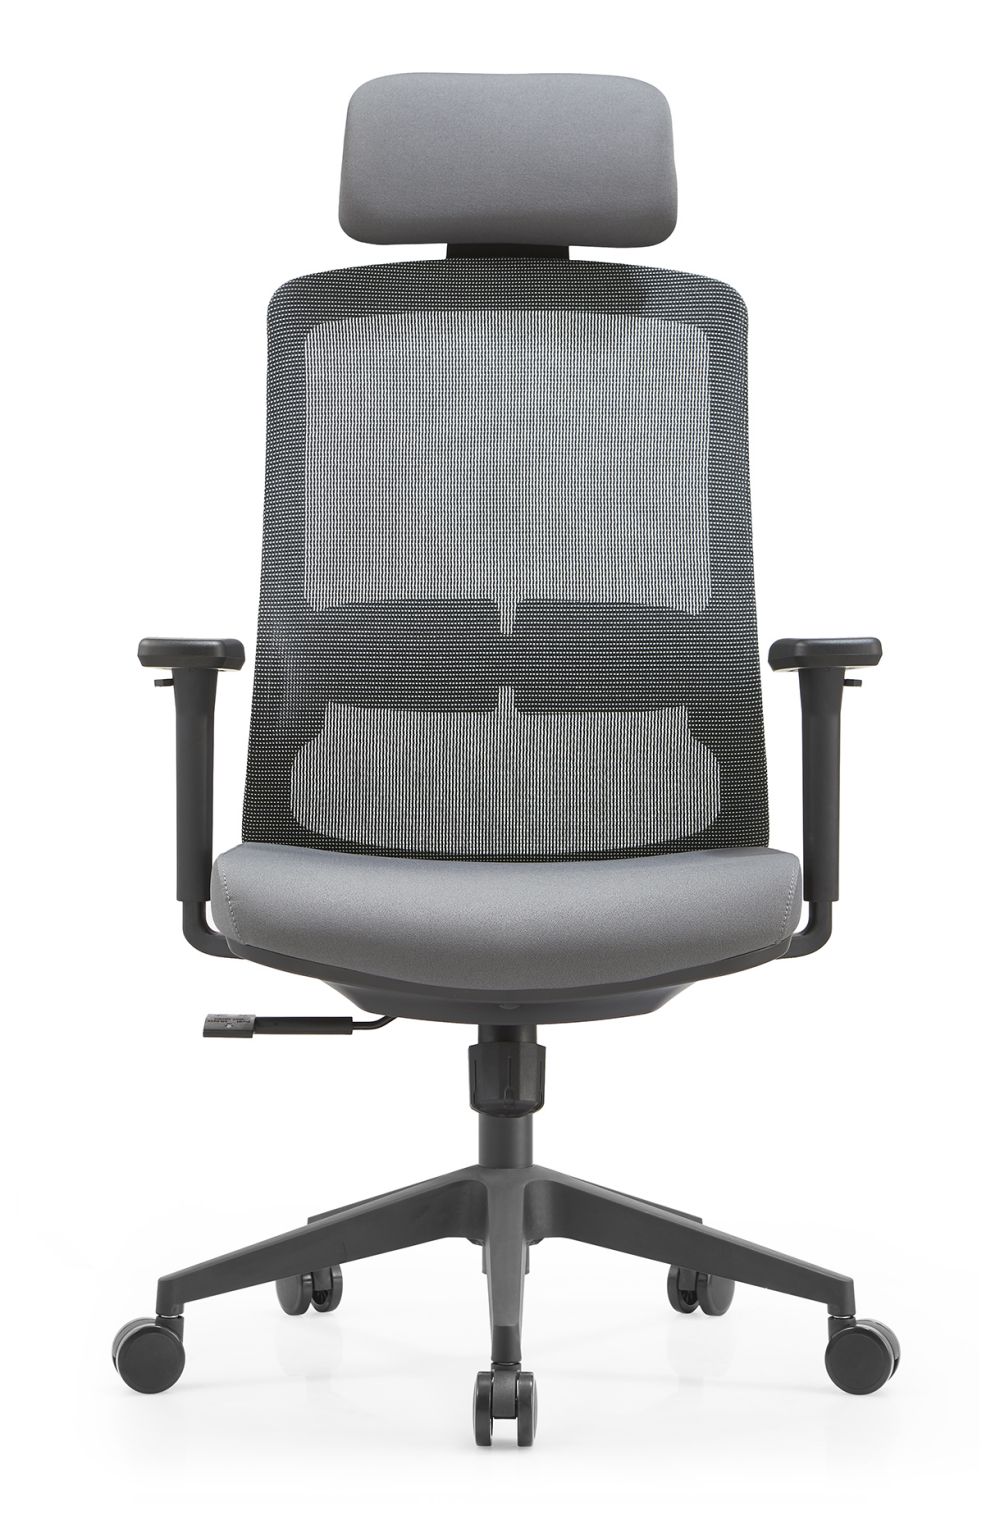 Otthoni ergonomikus irodai szék (1)